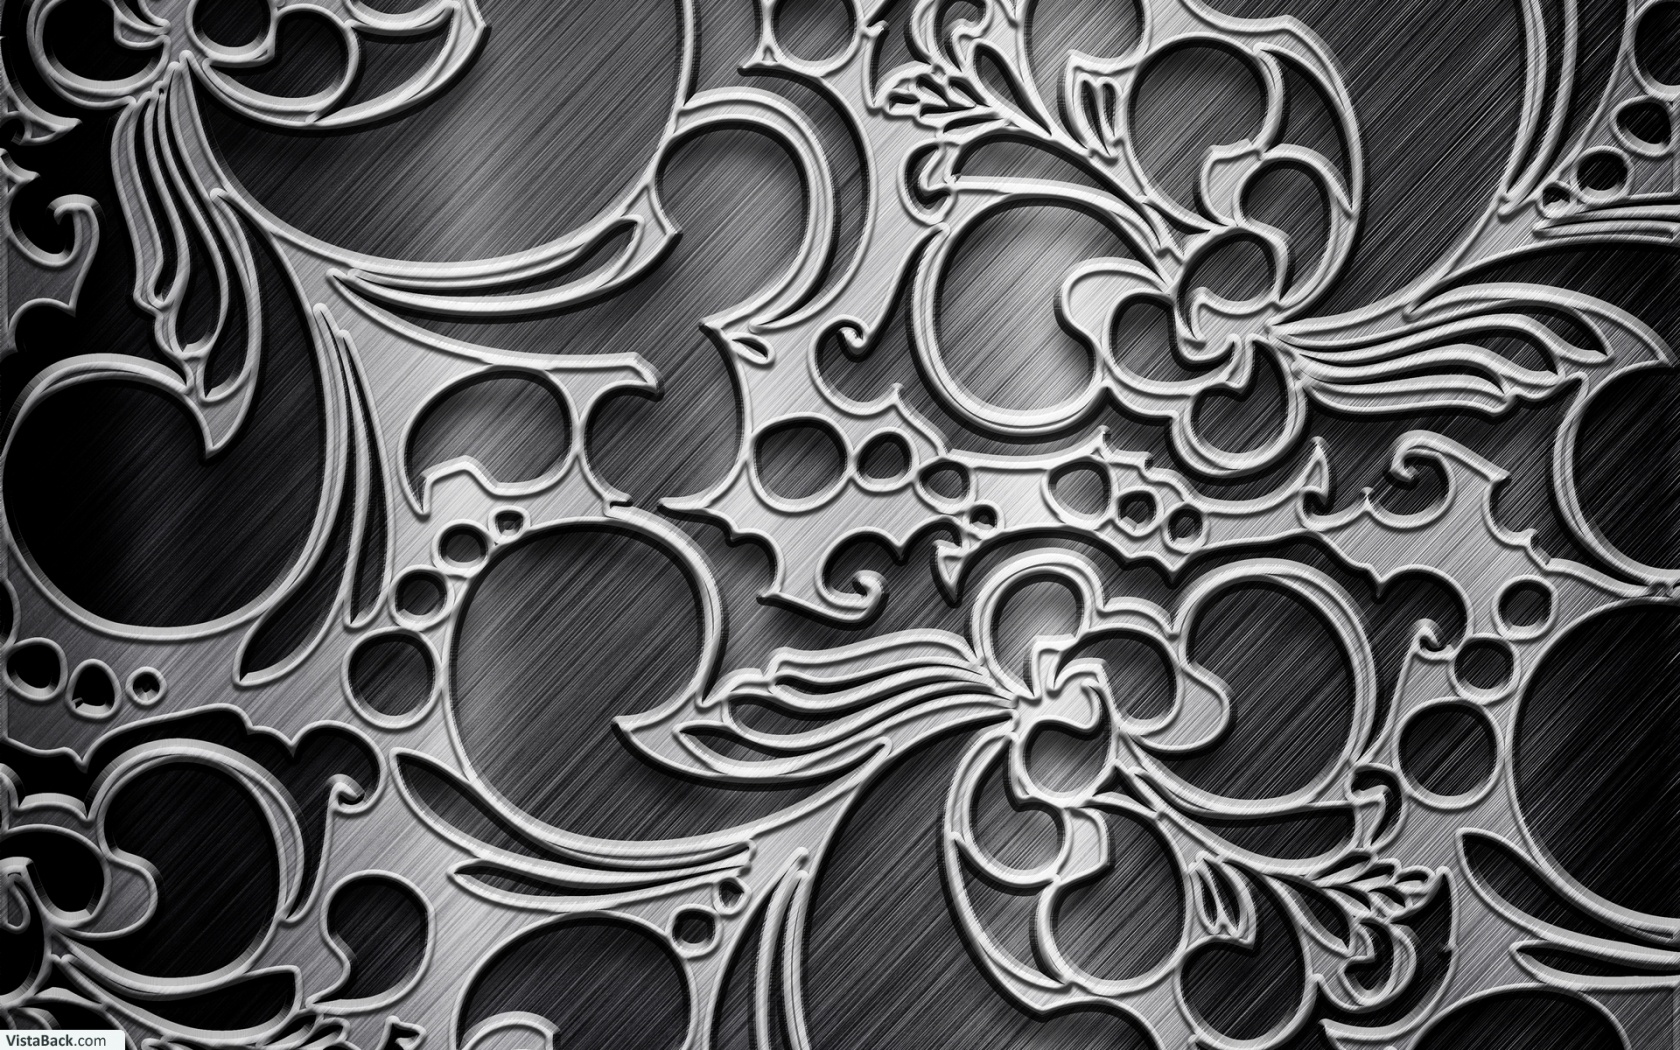 [47+] Black and Silver Background Wallpaper | WallpaperSafari.com